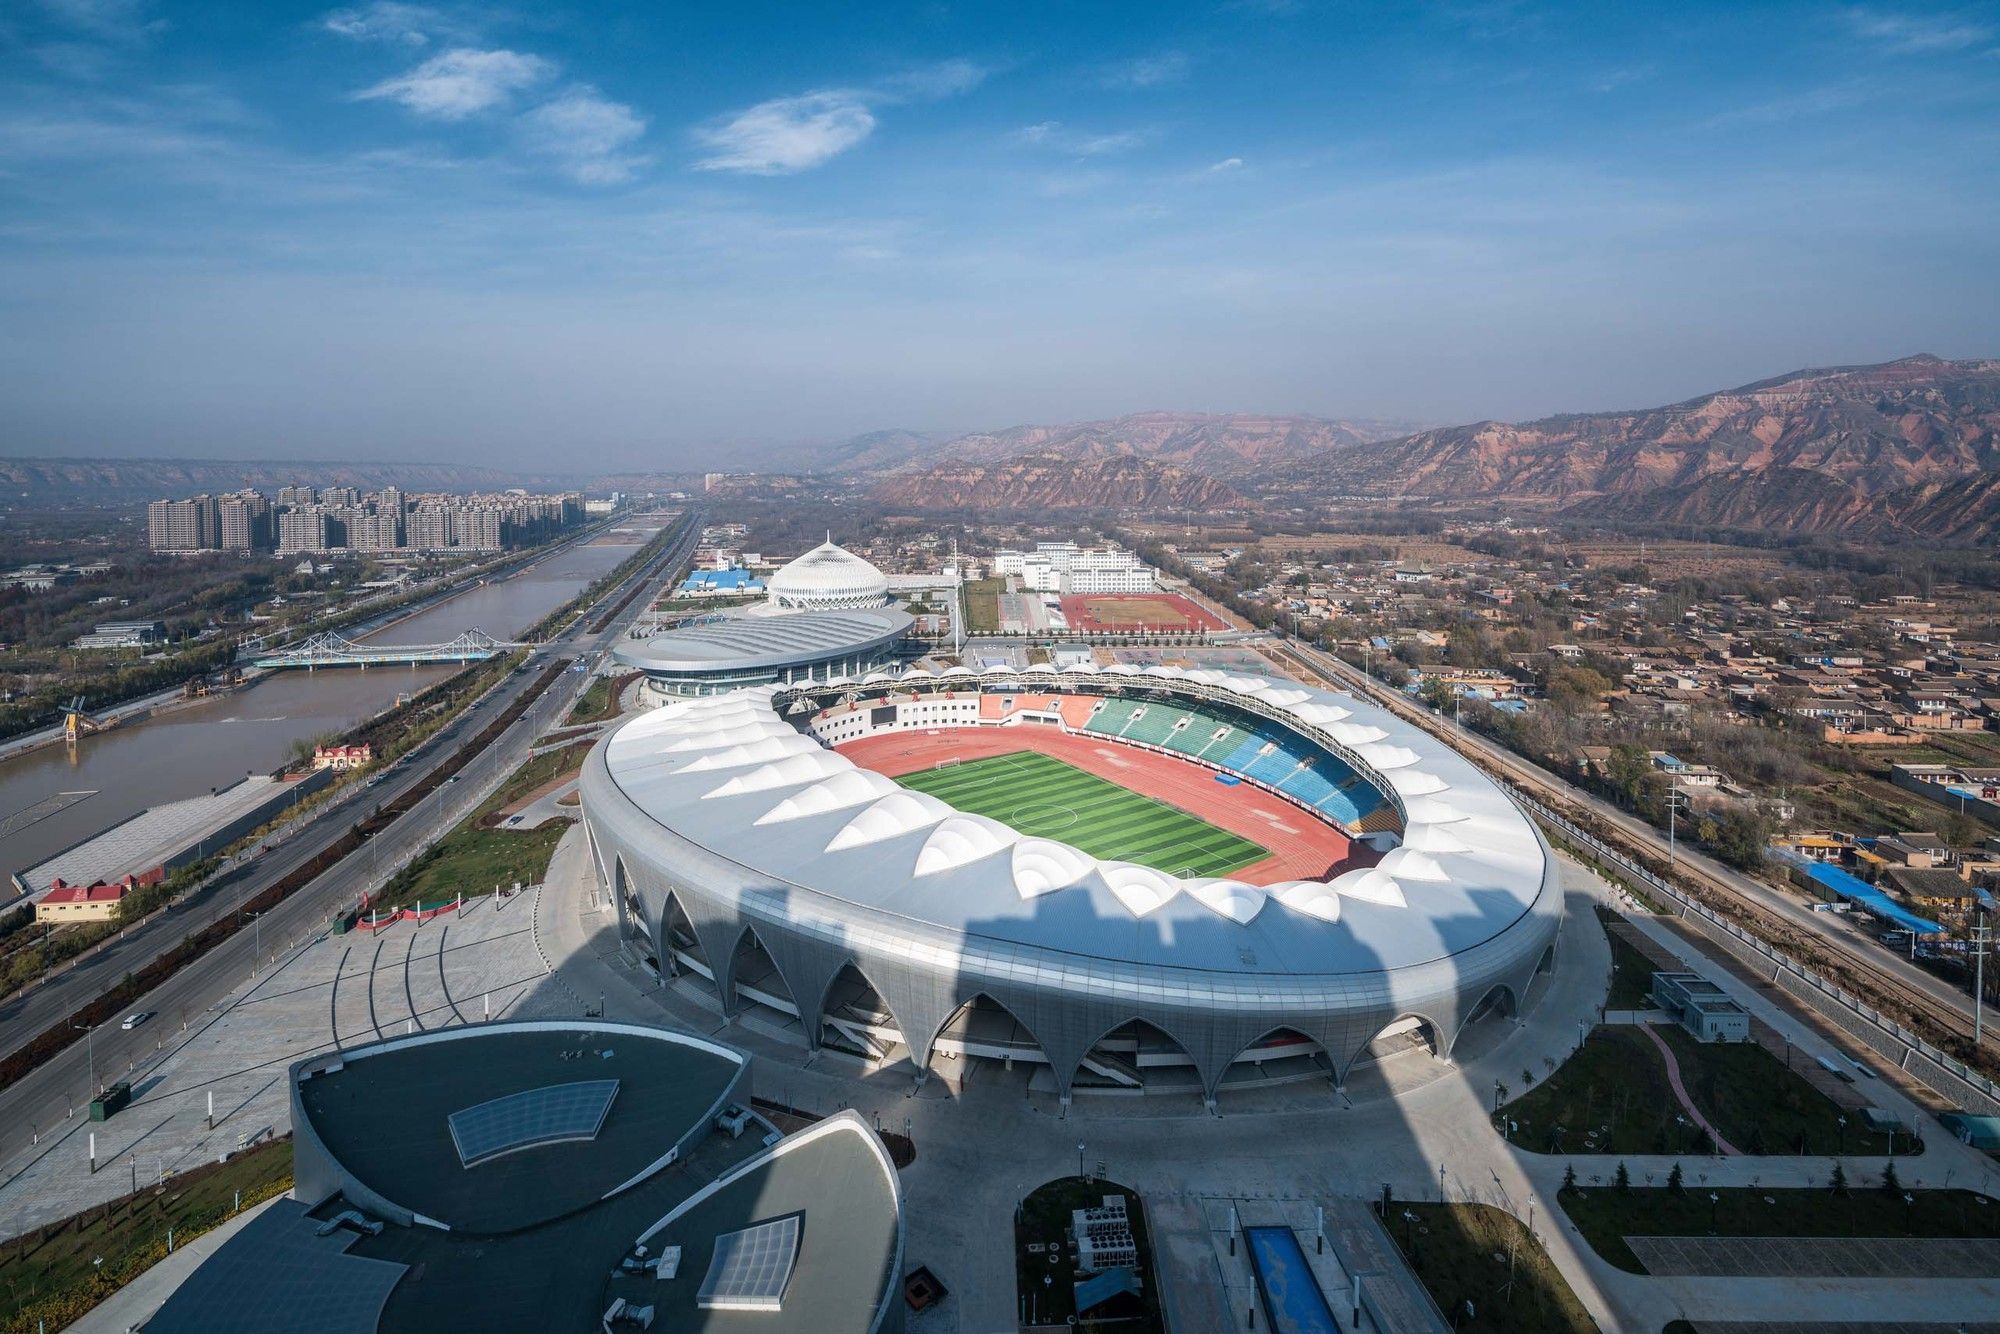 Center stadium. Suzhou Olympic Sports Centre Stadium. Стадион Шэньчжэнь Универсиада центр. Hefei Olympic Sports Center Stadium. XI'an Olympic Sports Center Stadium.